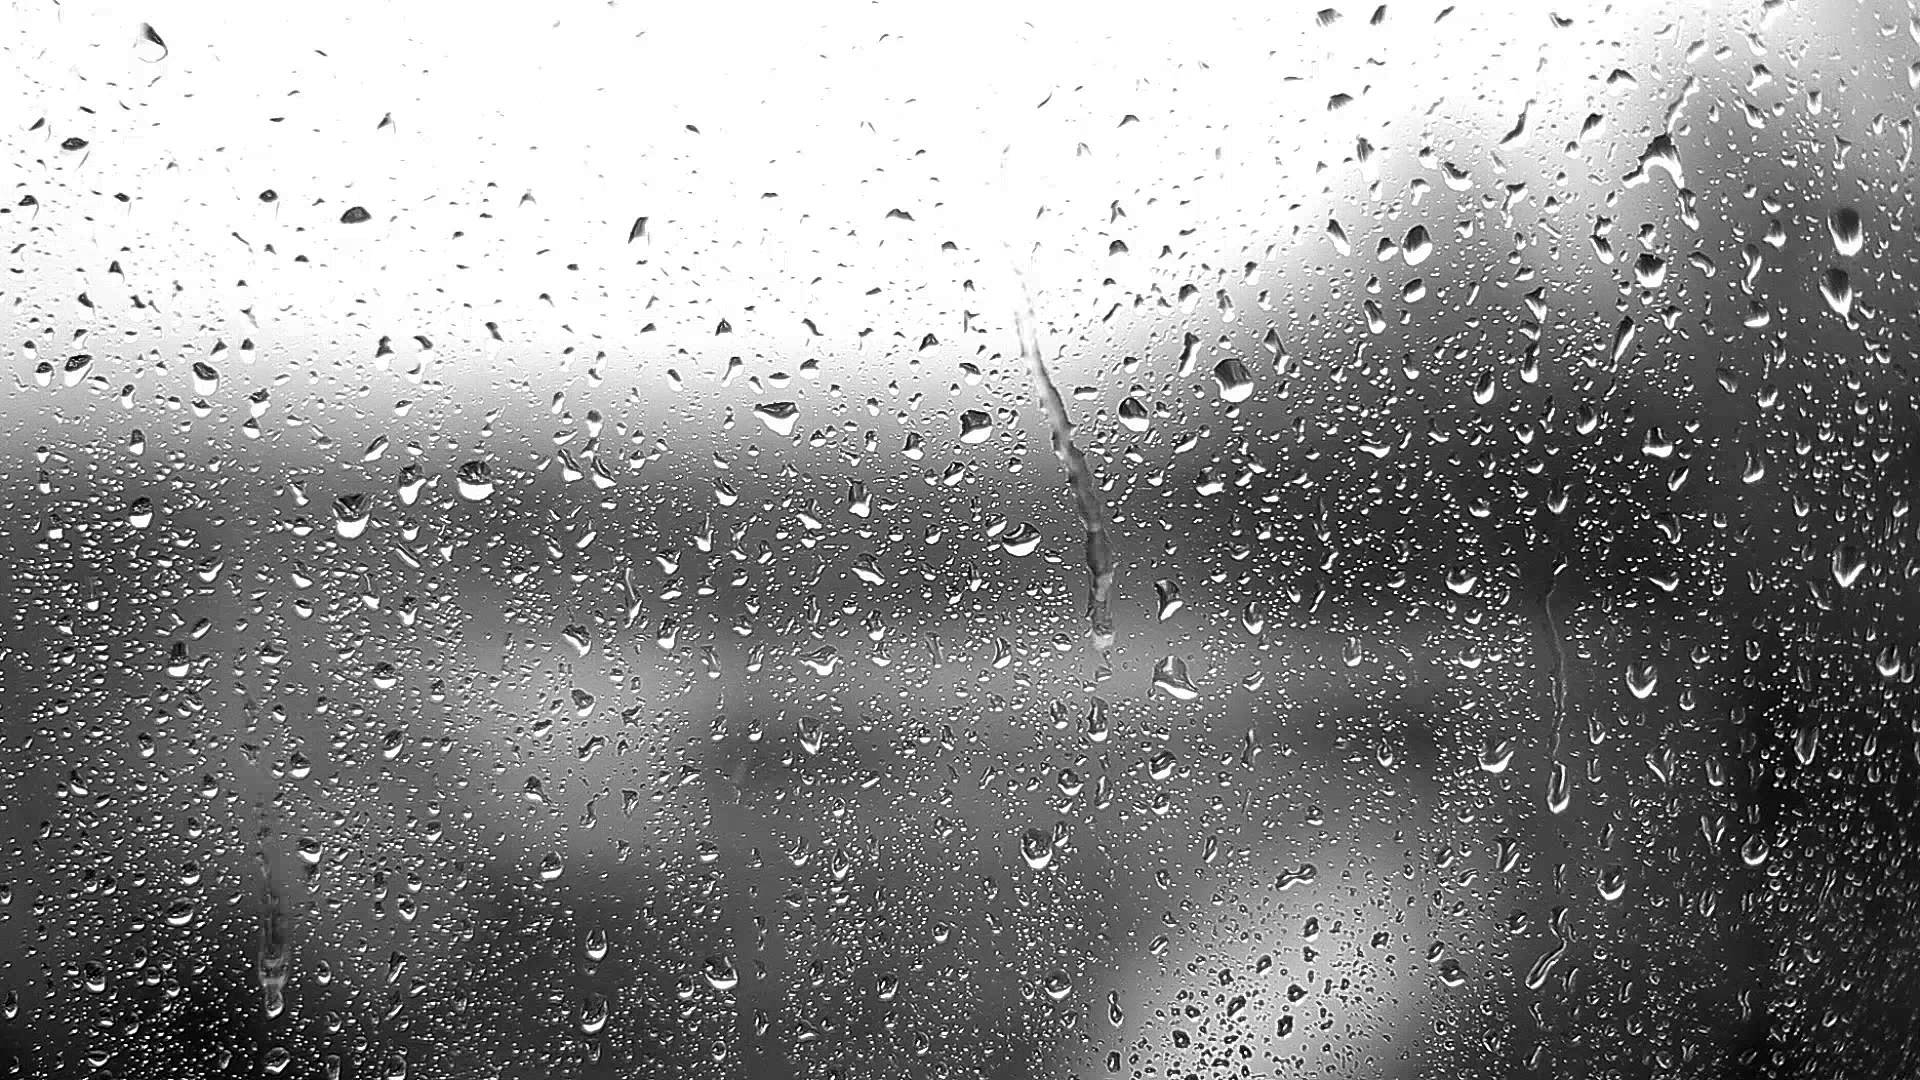 rain on window wallpapers wallpaper cave on raindrops on window wallpaper